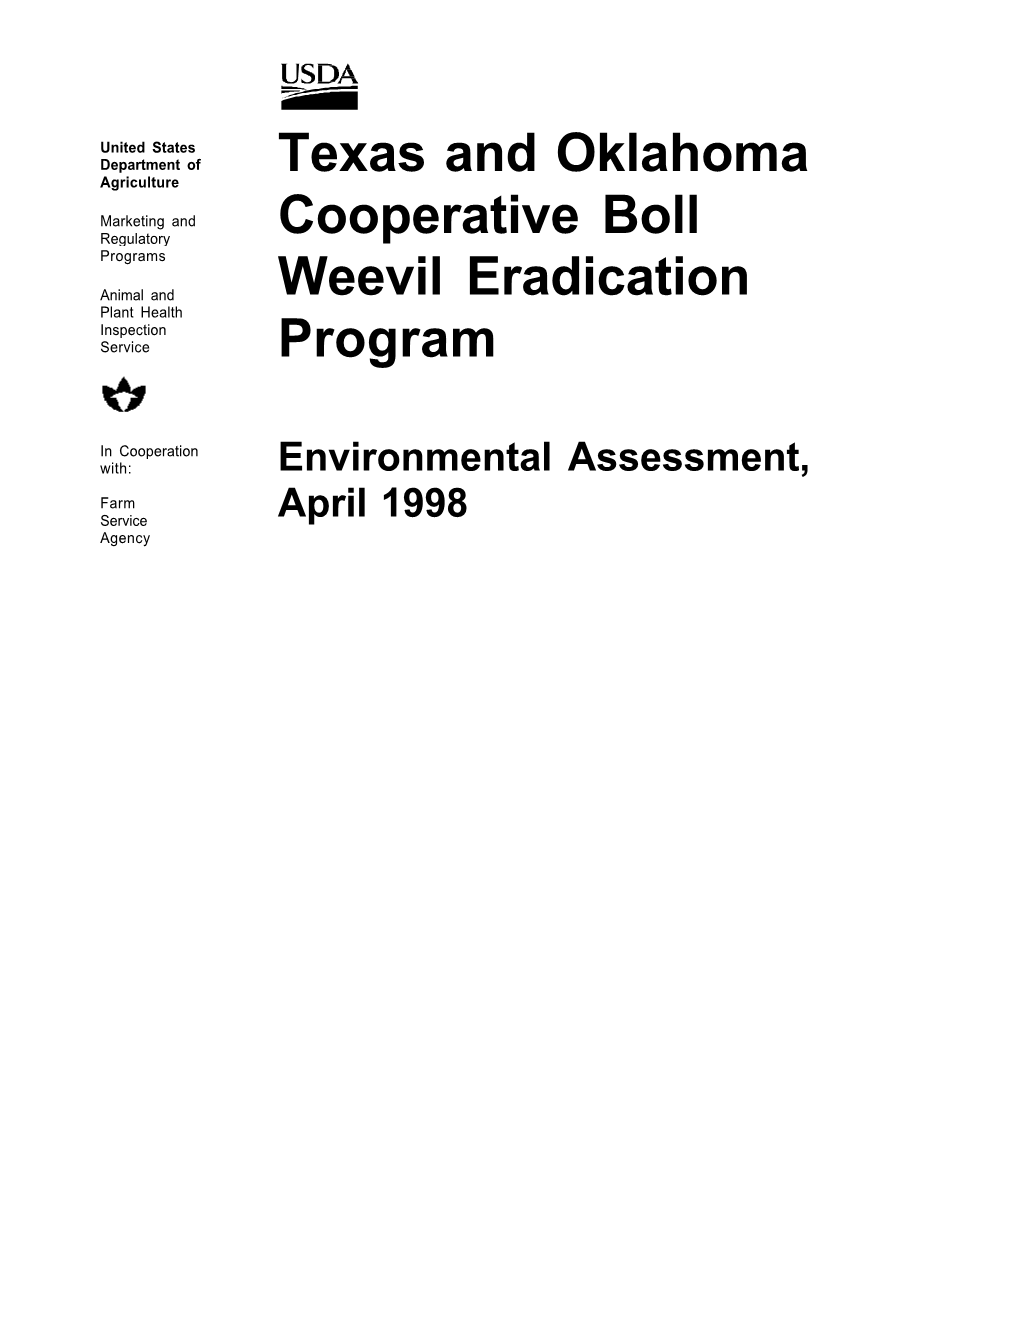 Texas and Oklahoma Cooperative Boll Weevil Eradication Program